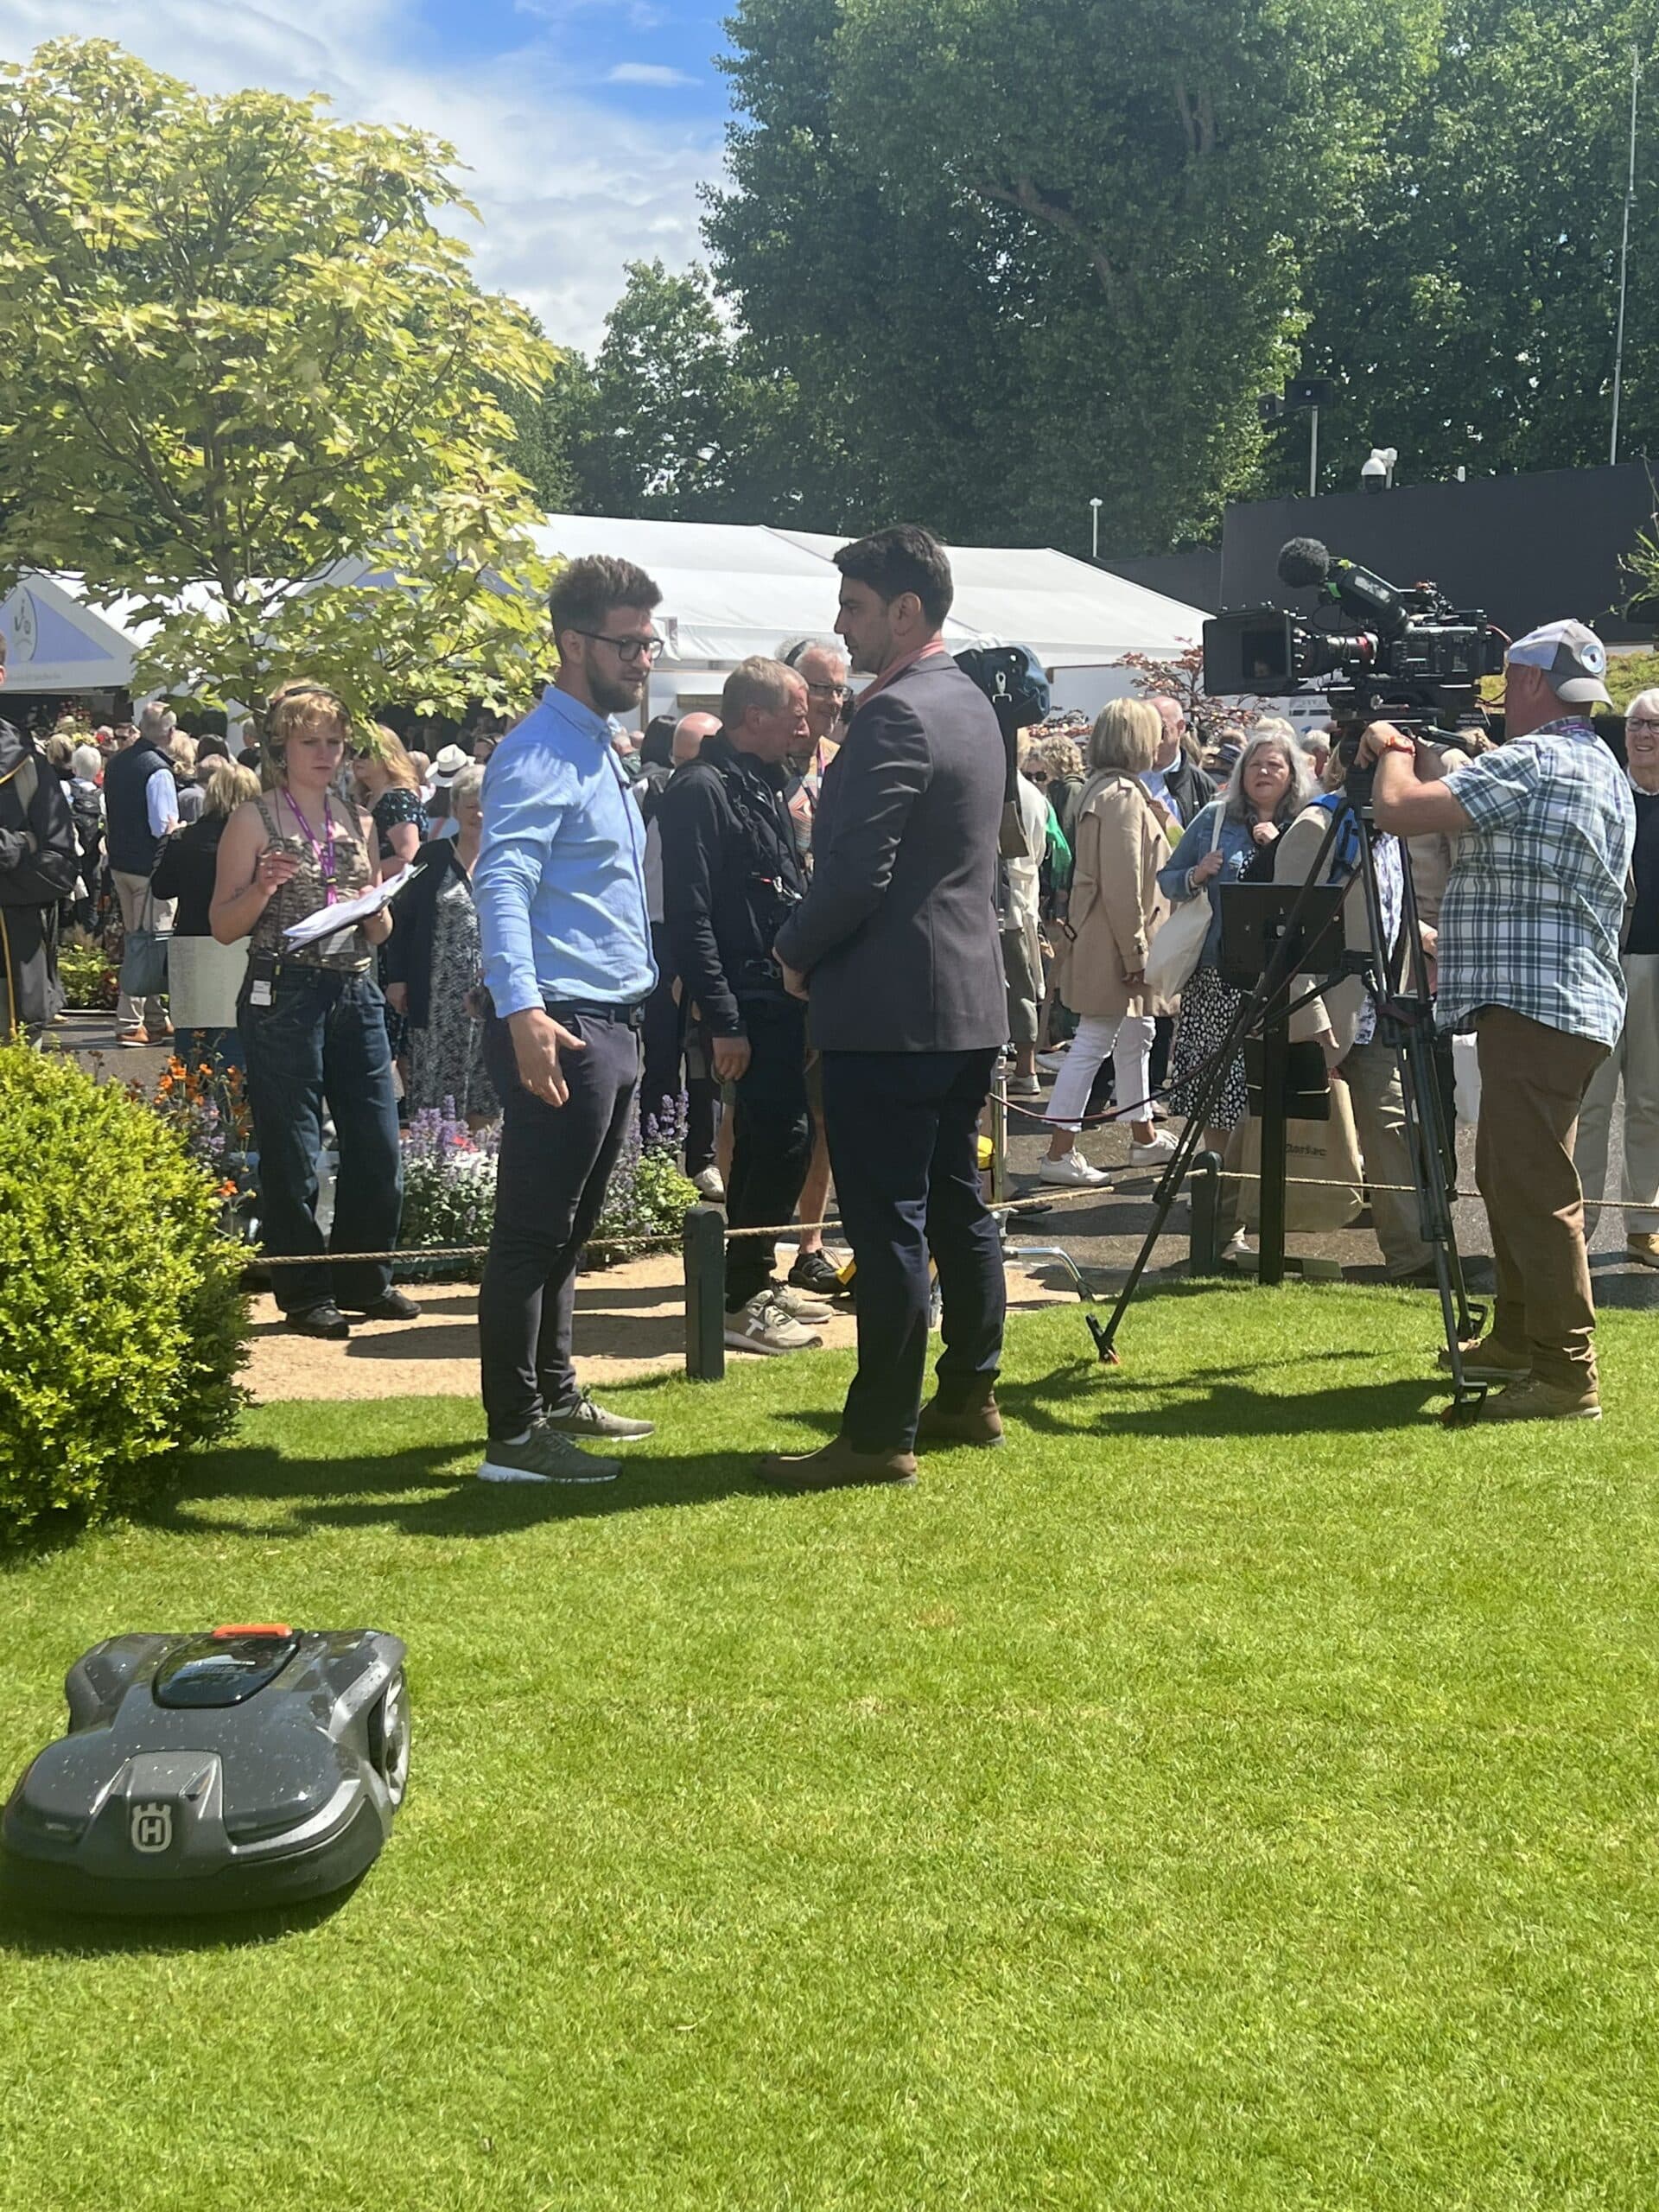 Tom Platts Talks Robot Lawn Mowers with BBC Presenter Chris Bavin